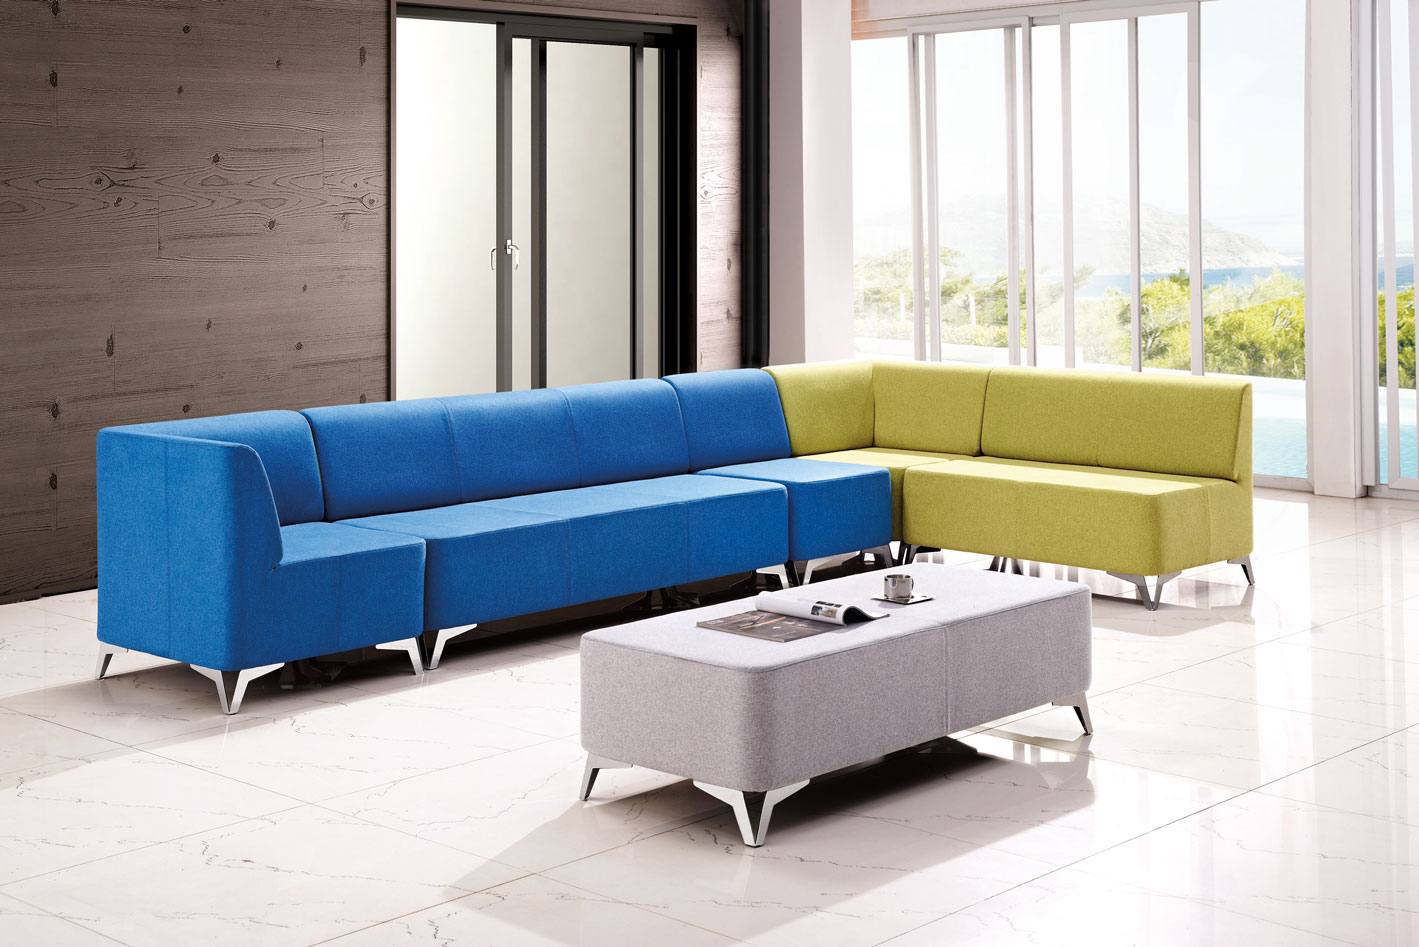 Leisure sofa, living room sectional sofa, fabric sofa design (SF-025)